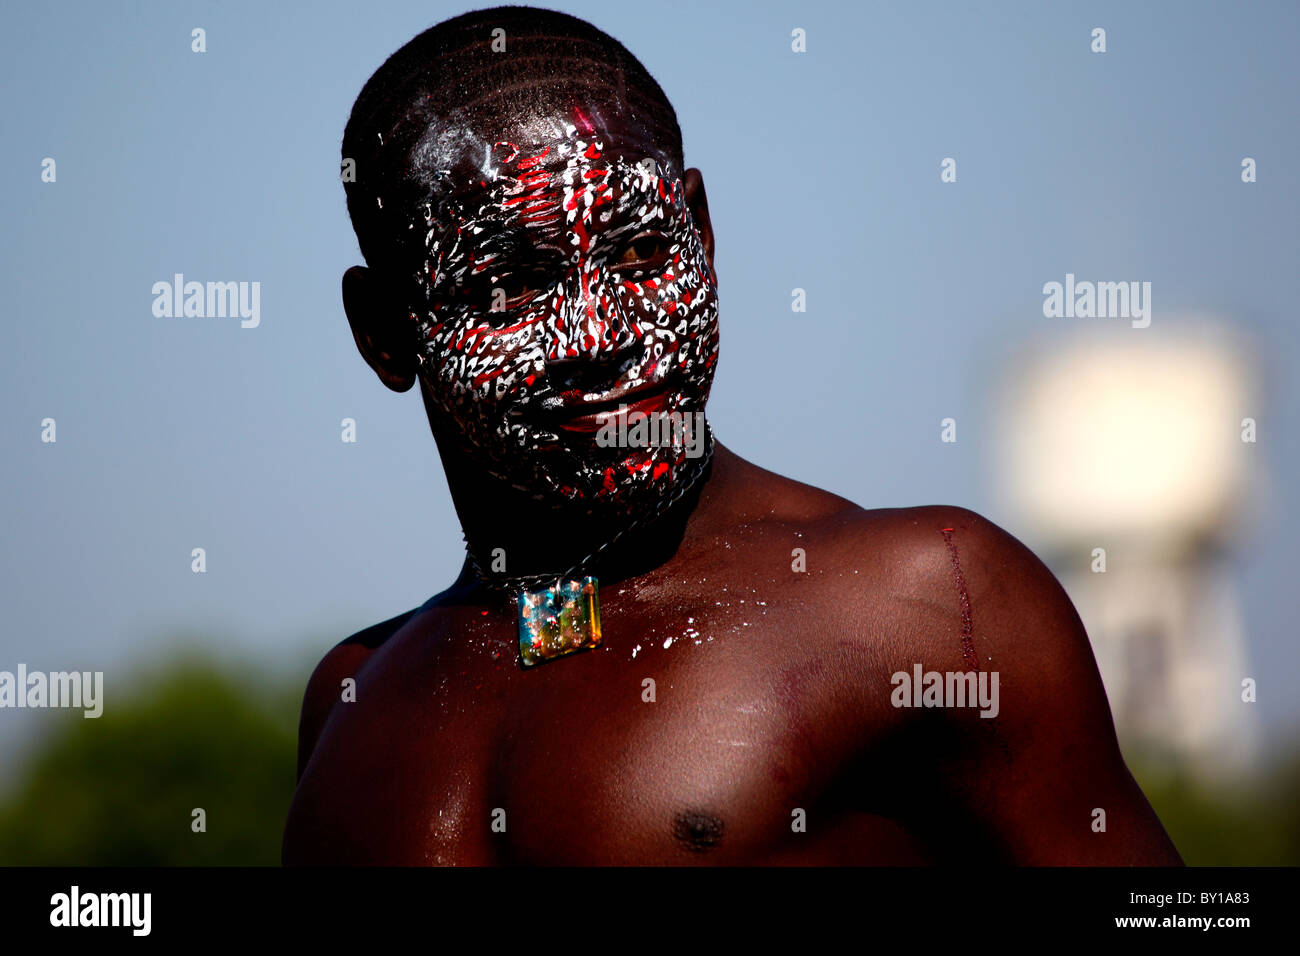 Body paint - siddi tribe of Gujarat, India Stock Photo